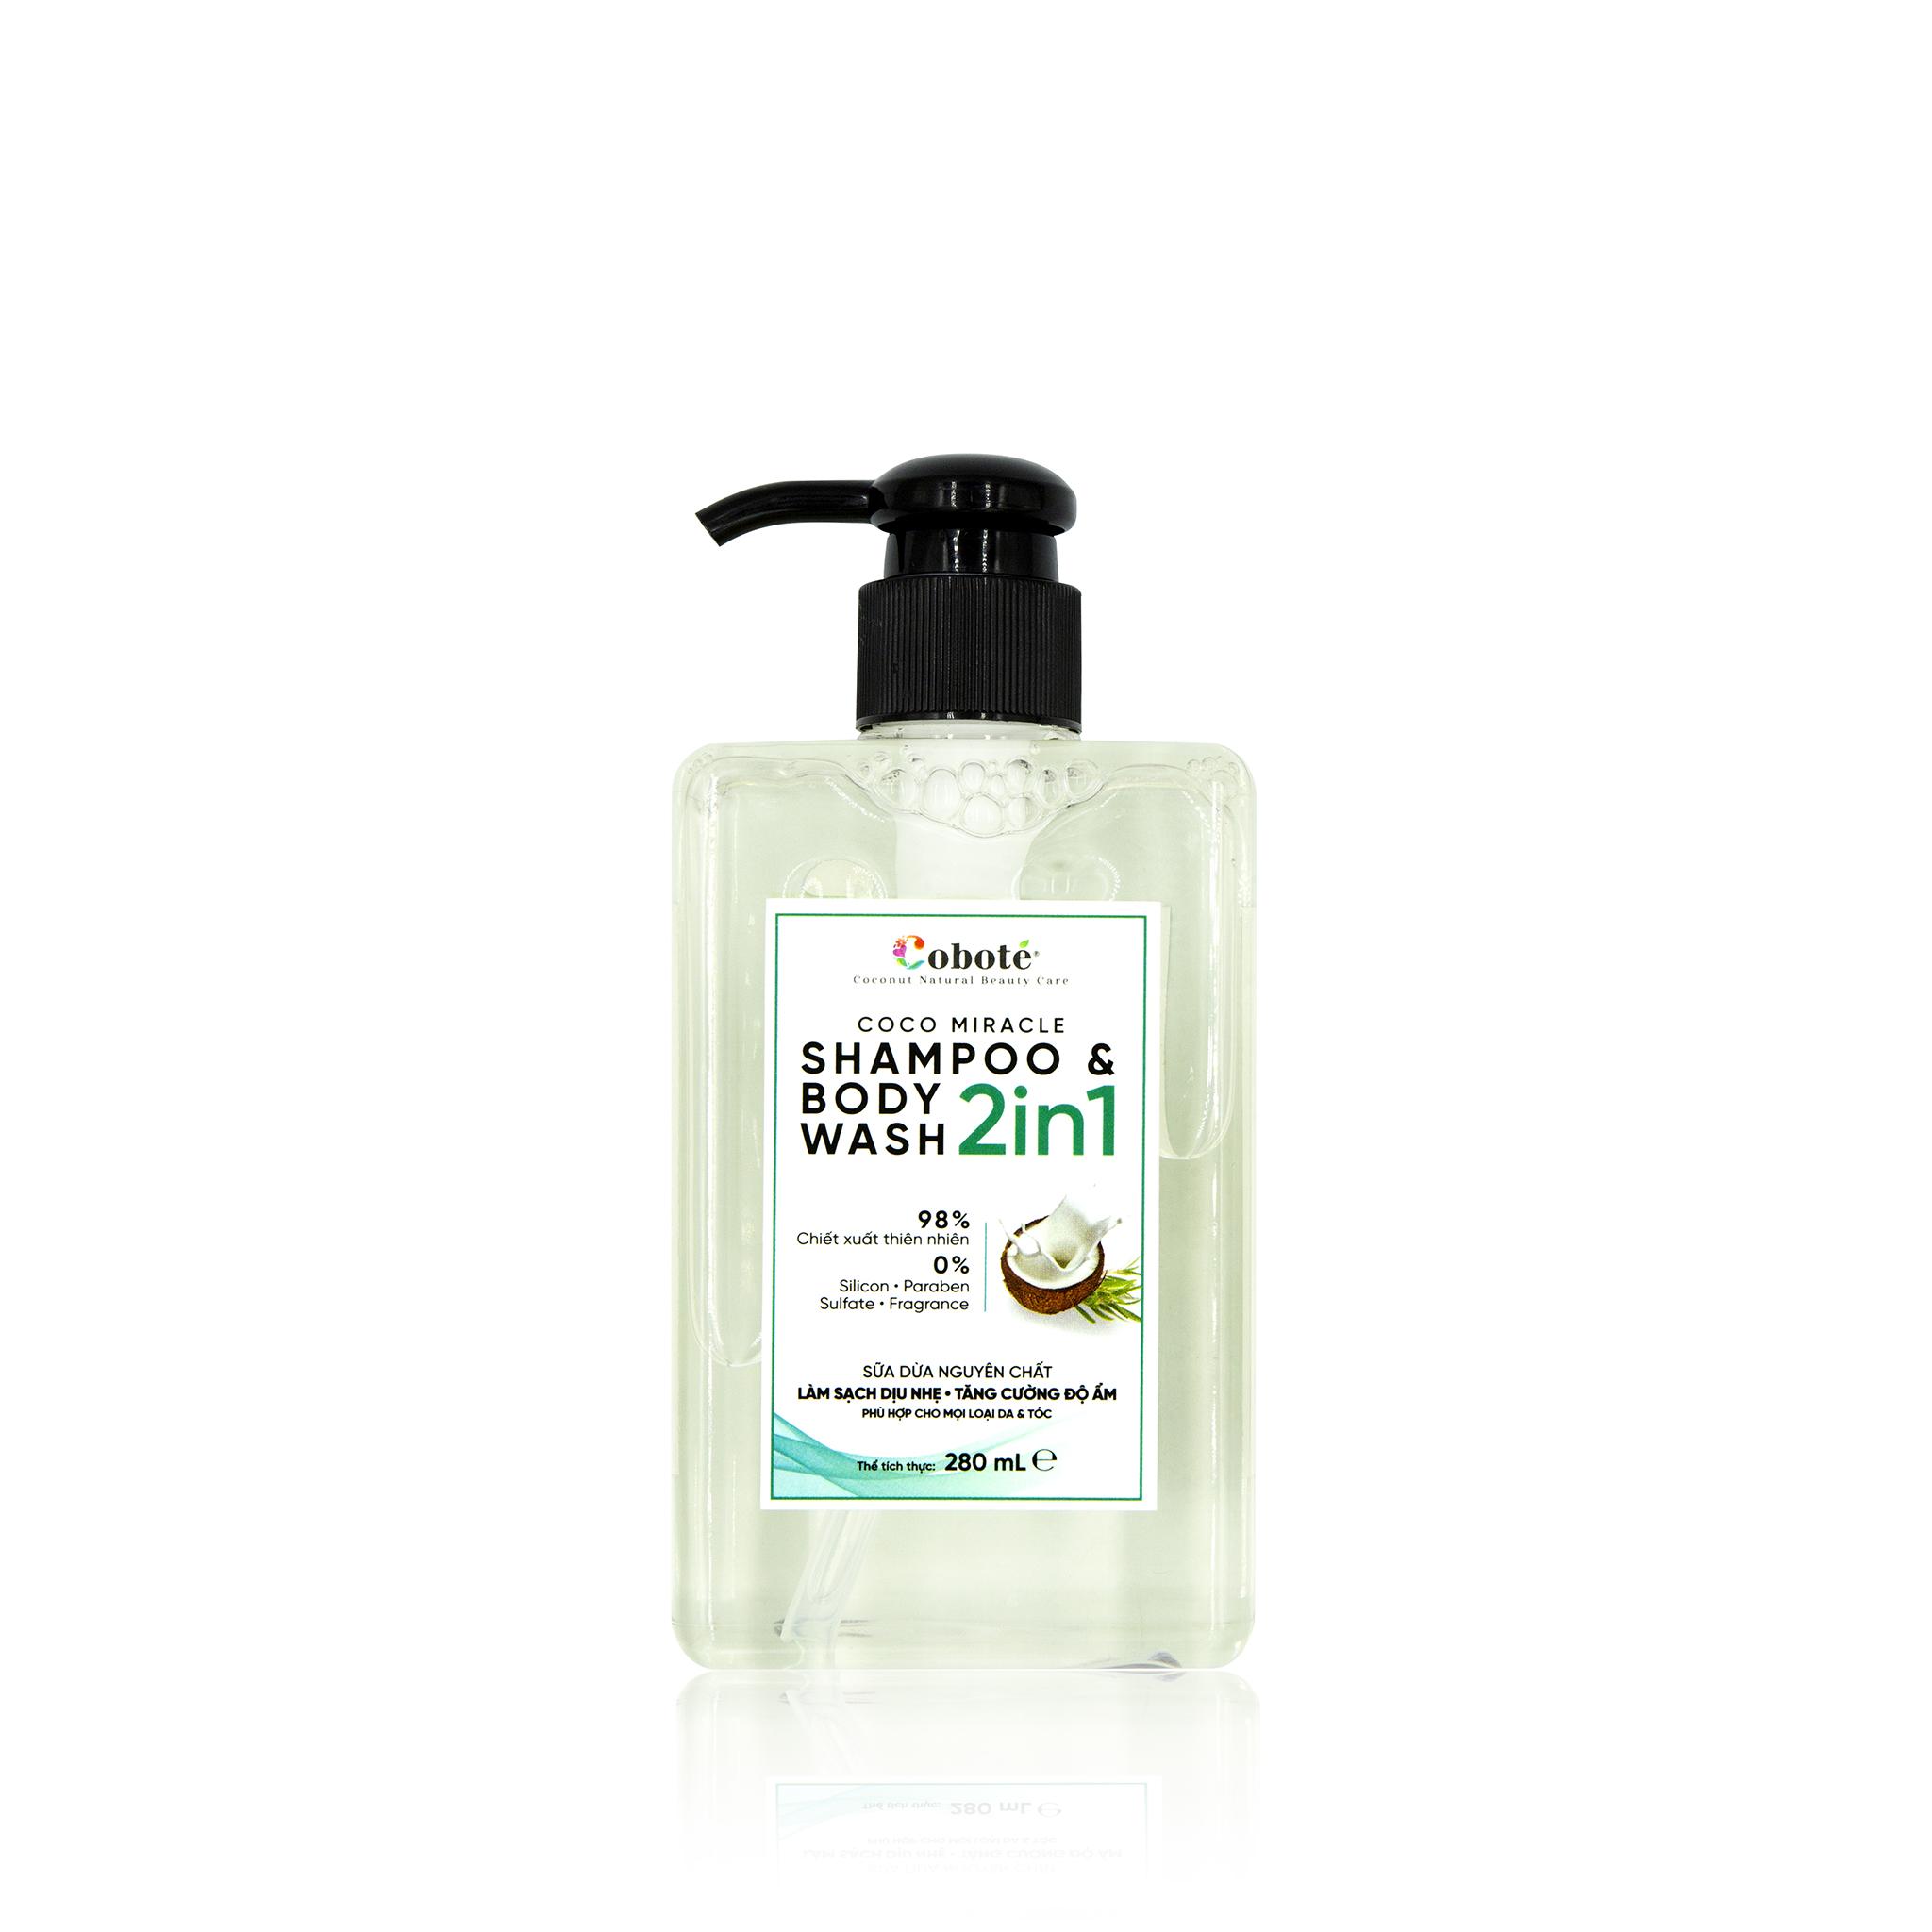 DẦU TẮM GỘI TOÀN THÂN 2IN1 - Coco Miracle Shampoo and Body Wash 2in1 280ml